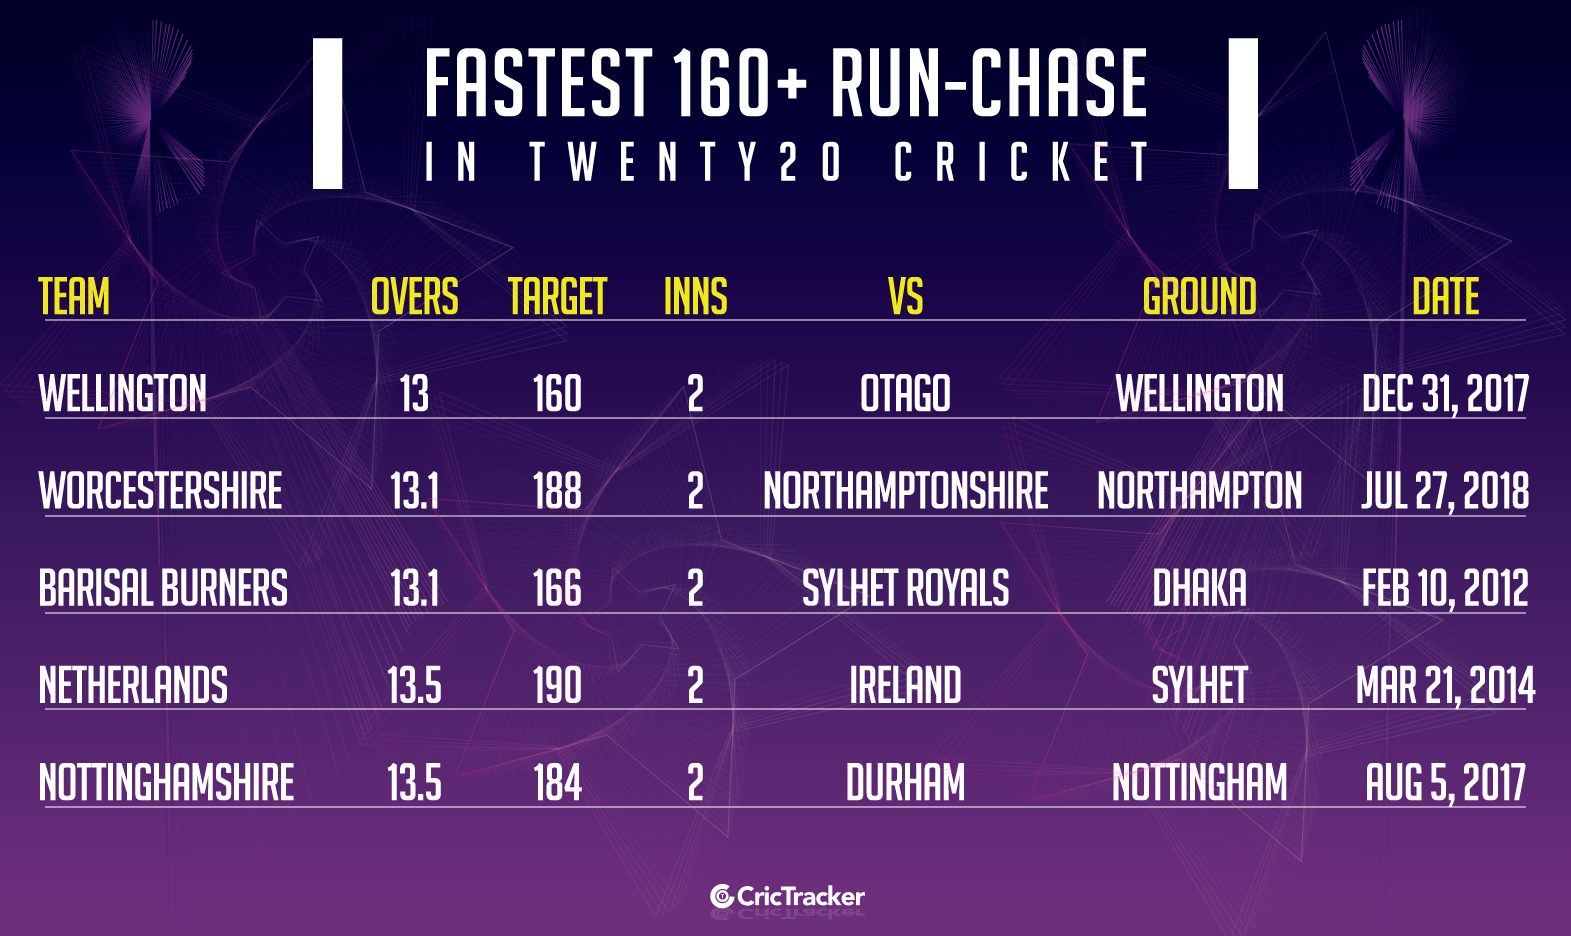 Fastest-160+-run-chase-in-Twenty20-cricket